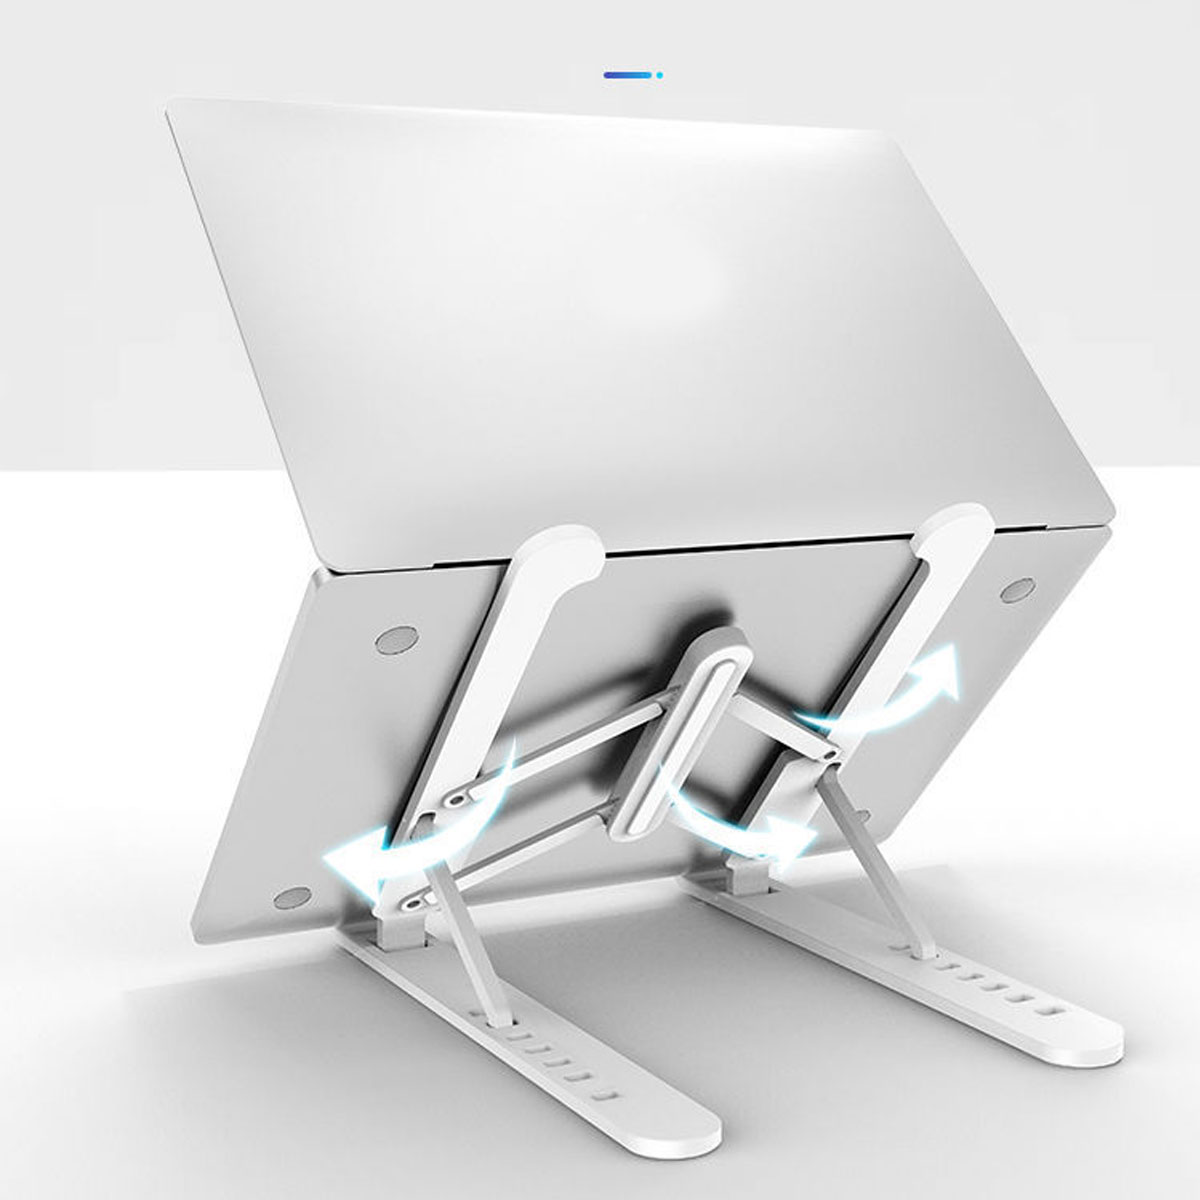 Portable-Foldable-Height-Adjustable-Heat-Dissipation-Desktop-Macbook-Laptop-Stand-Holder-1758602-10